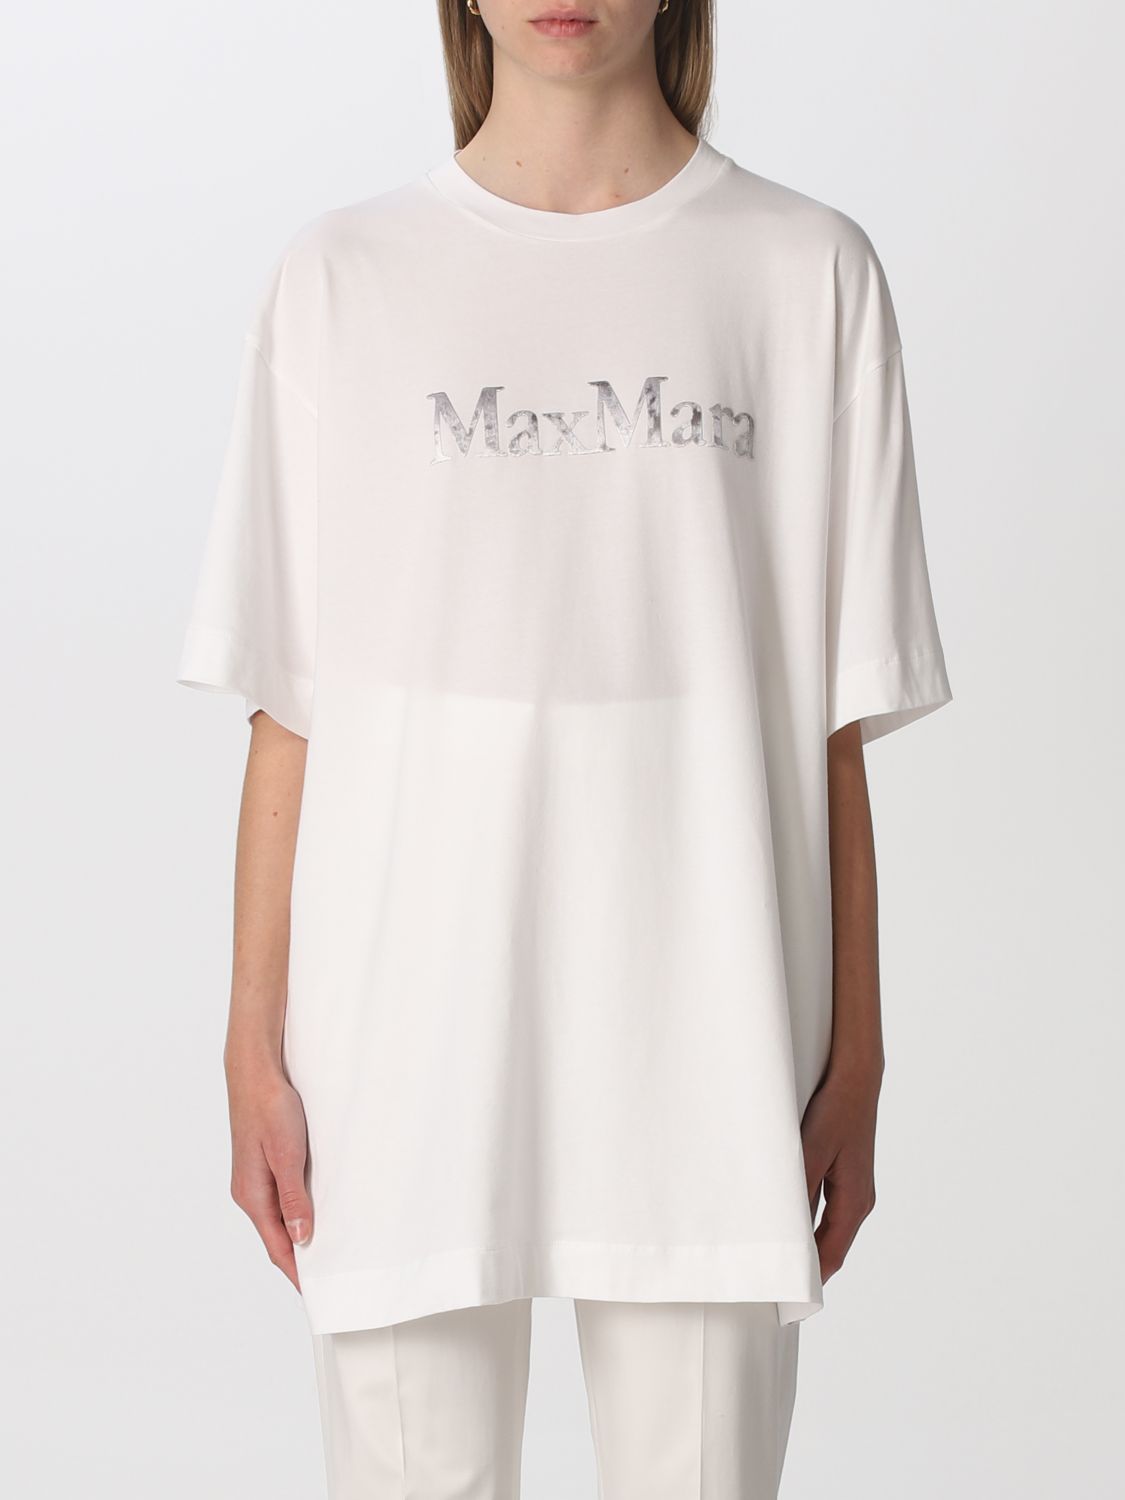 MAX MARA: over-size t-shirt with logo - White | Max Mara t-shirt 